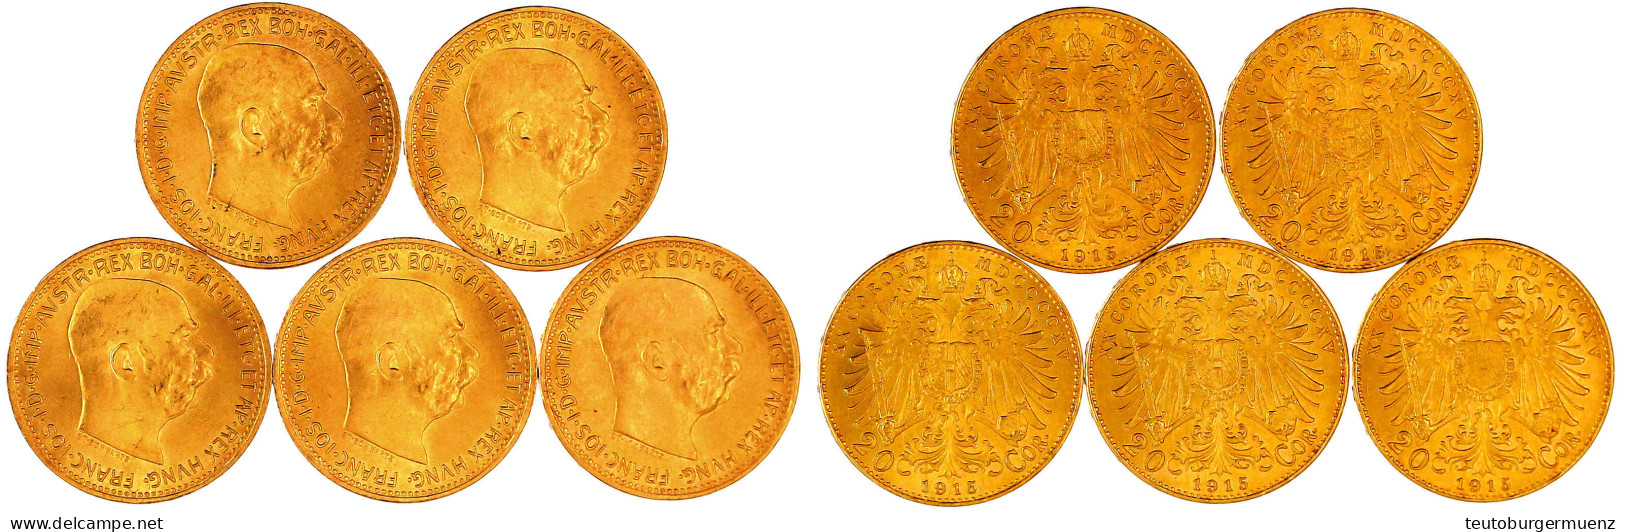 5 X 20 Kronen 1915, Offizielle NP. Je 6,78 G. 900/1000. Alle Prägefrisch/Stempelglanz. Herinek 350 (5). - Gouden Munten